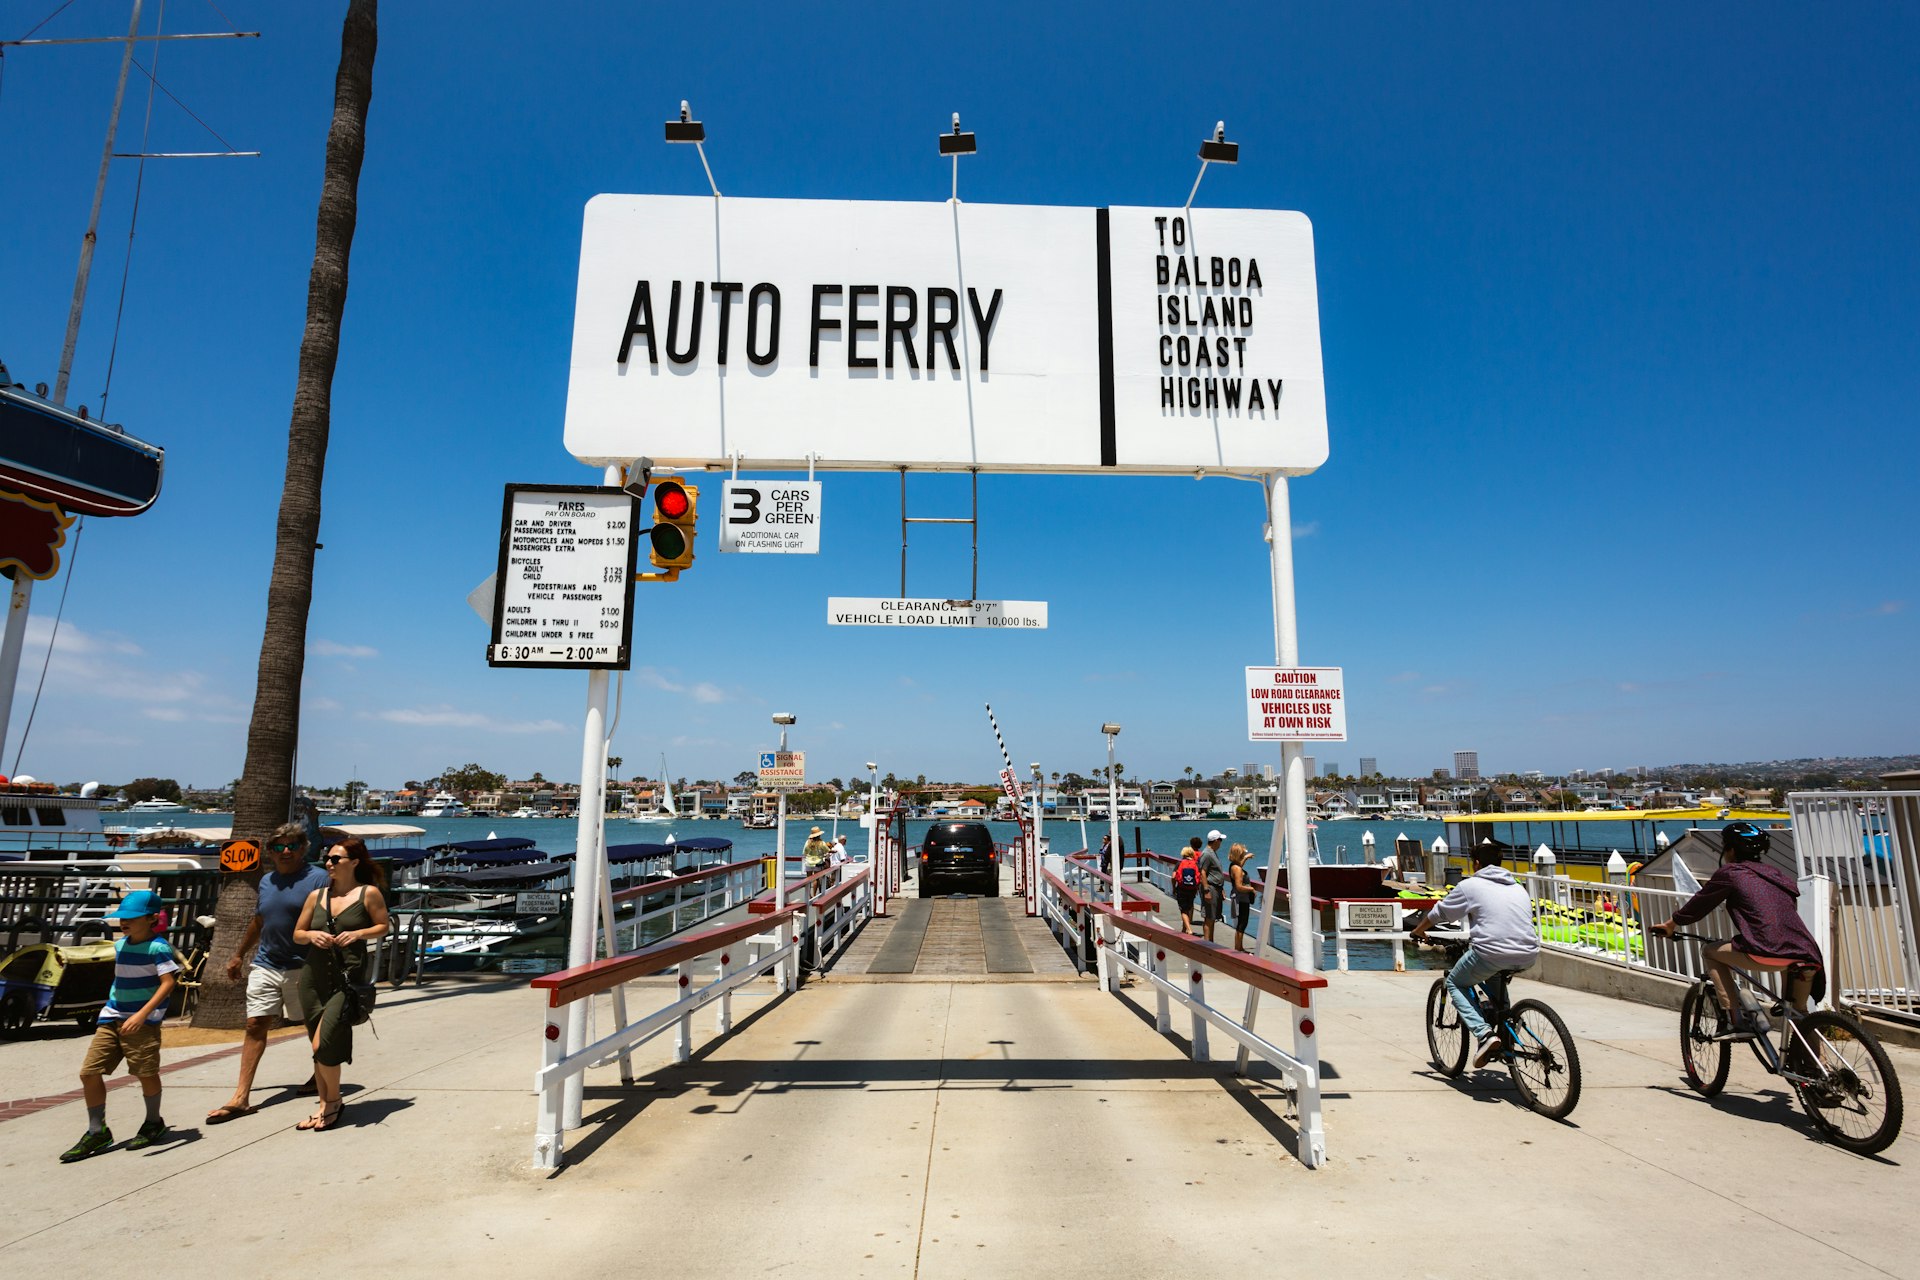 Looking straight on to the auto ferry, near Balboa Island